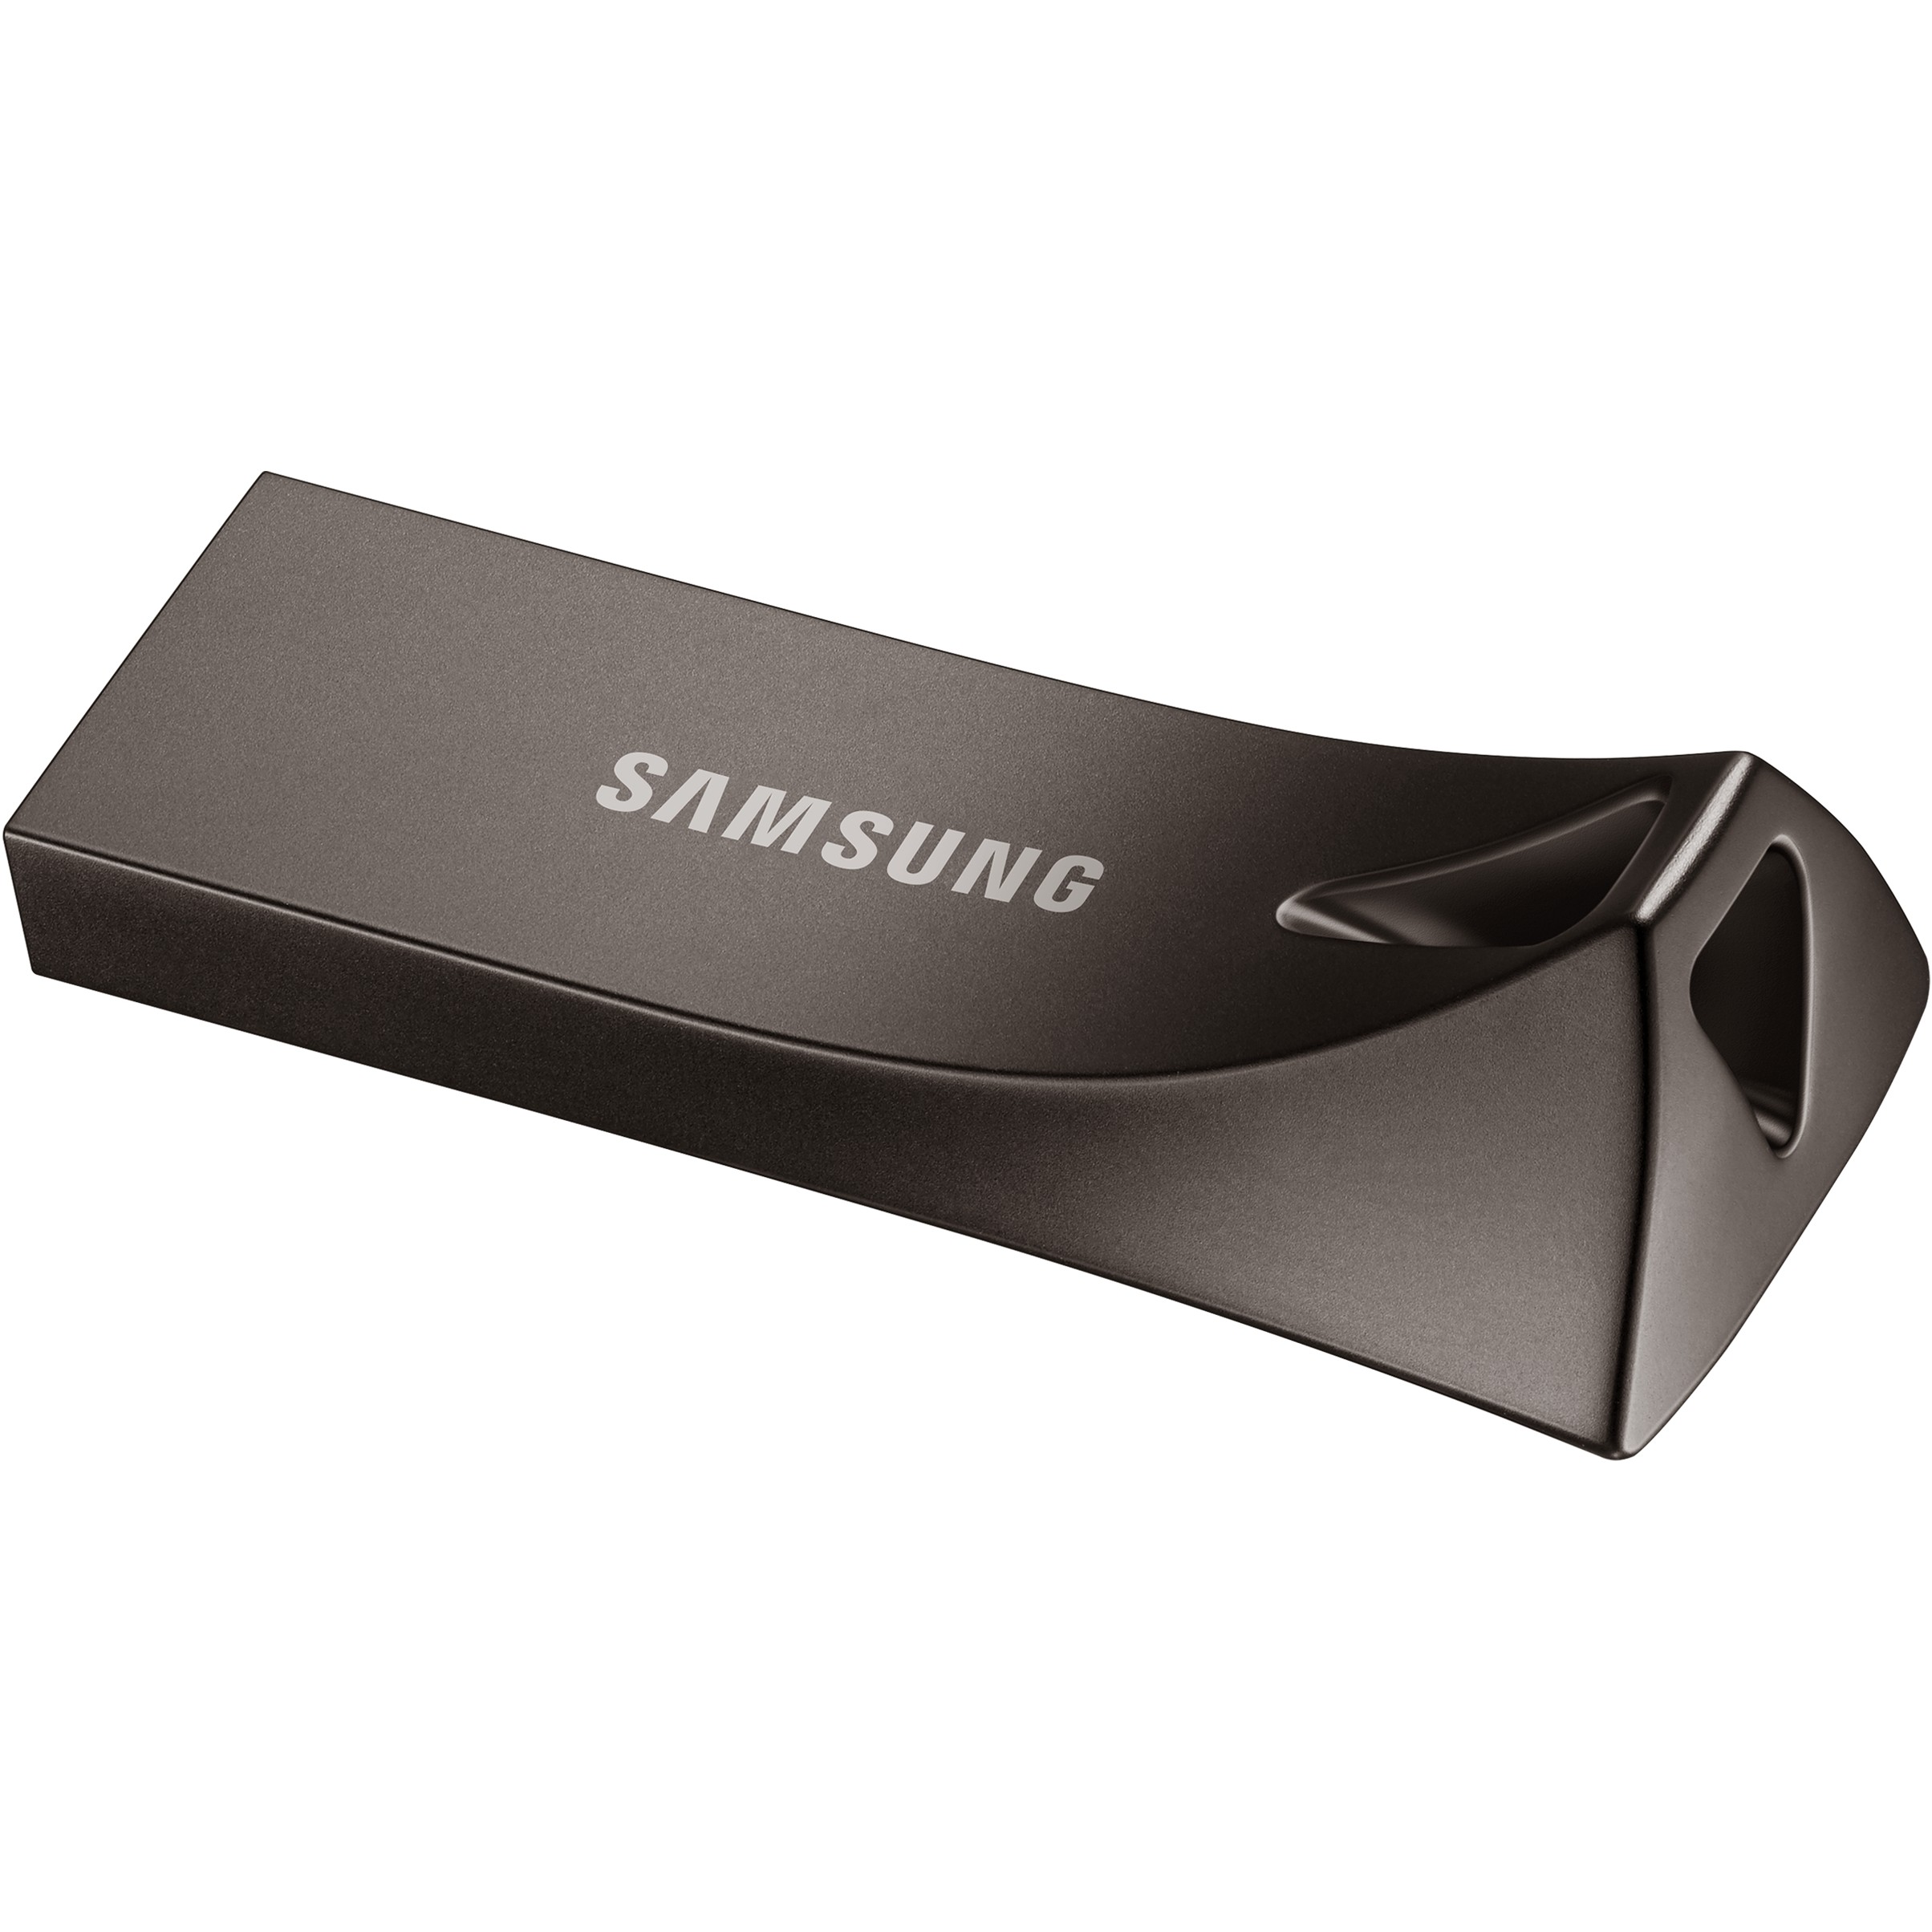 SAMSUNG MUF-128BE4/APC, USB-Stick, Samsung MUF-128BE USB  (BILD6)